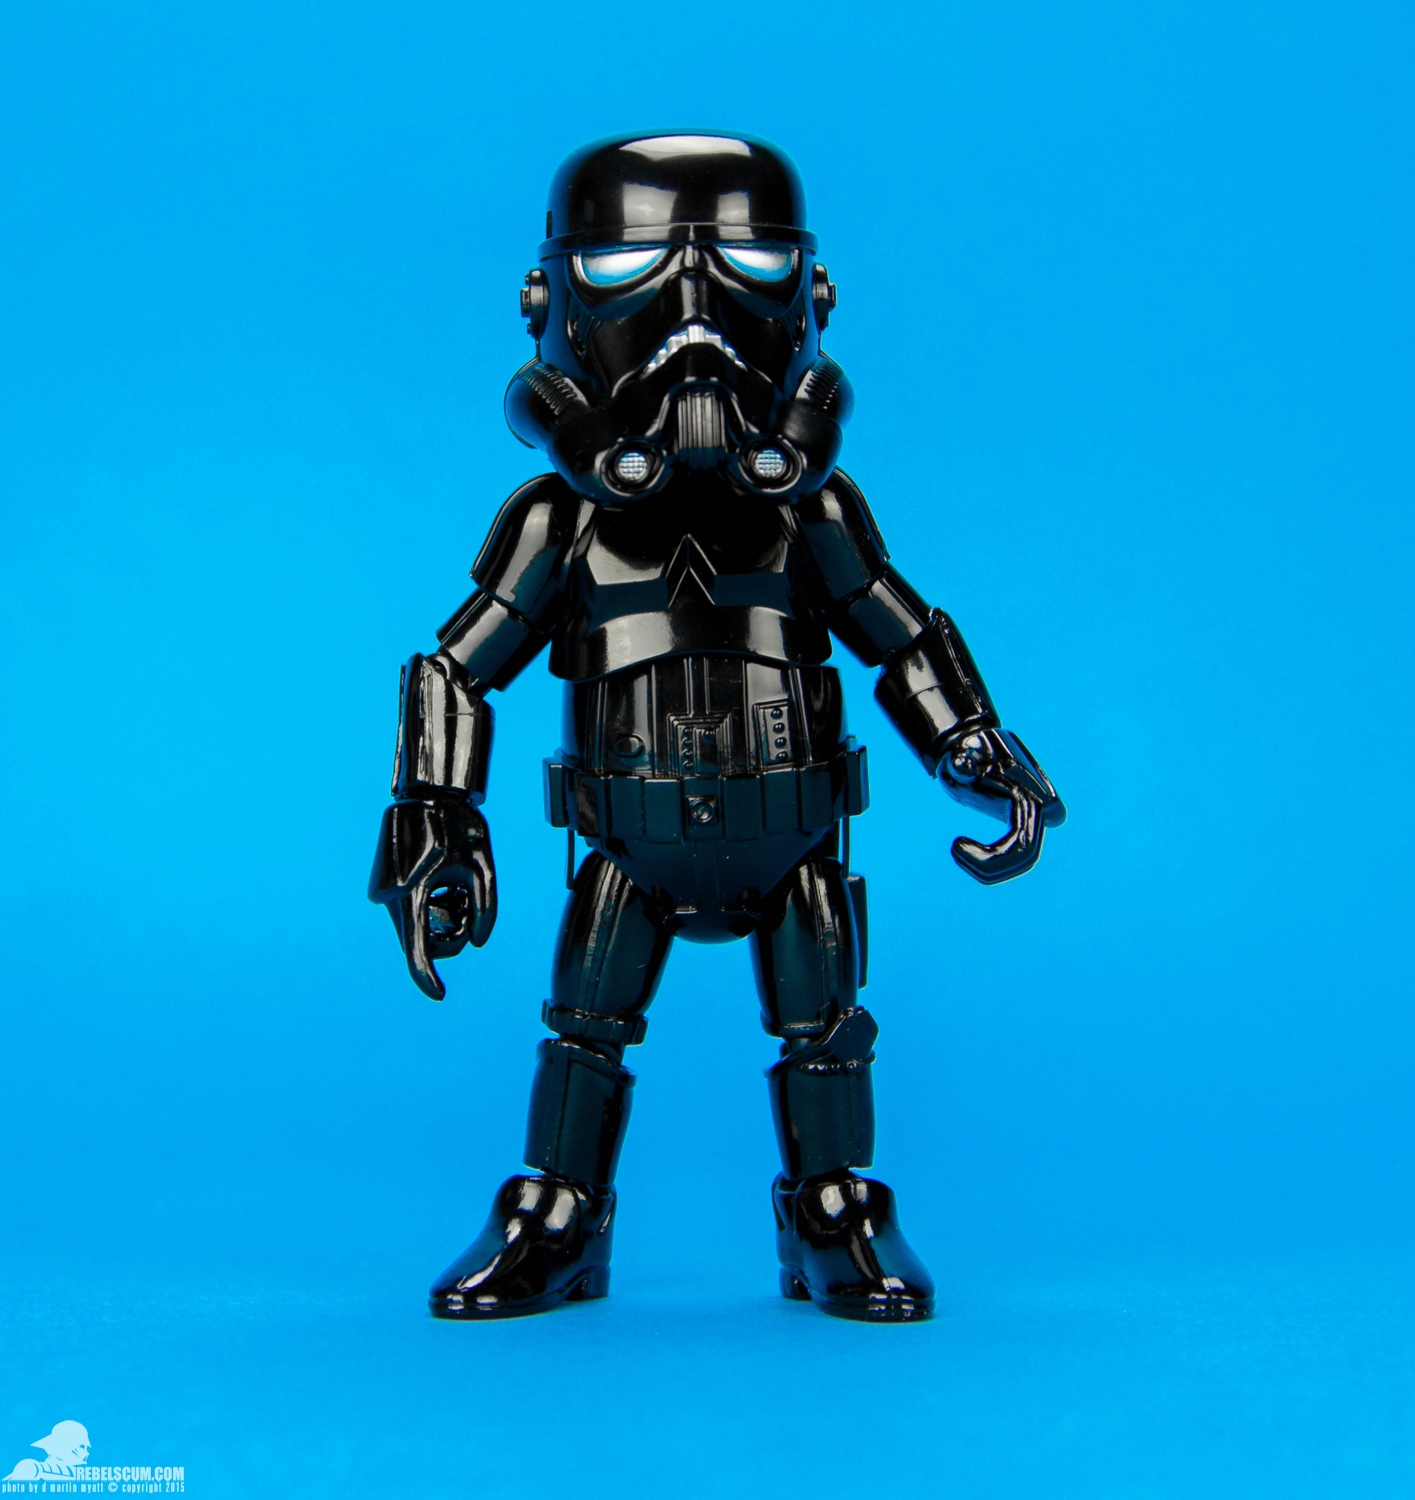 HMF005S-Shadow-Stormtrooper-Herocross-Hybrid-Metal-Figuration-001.jpg